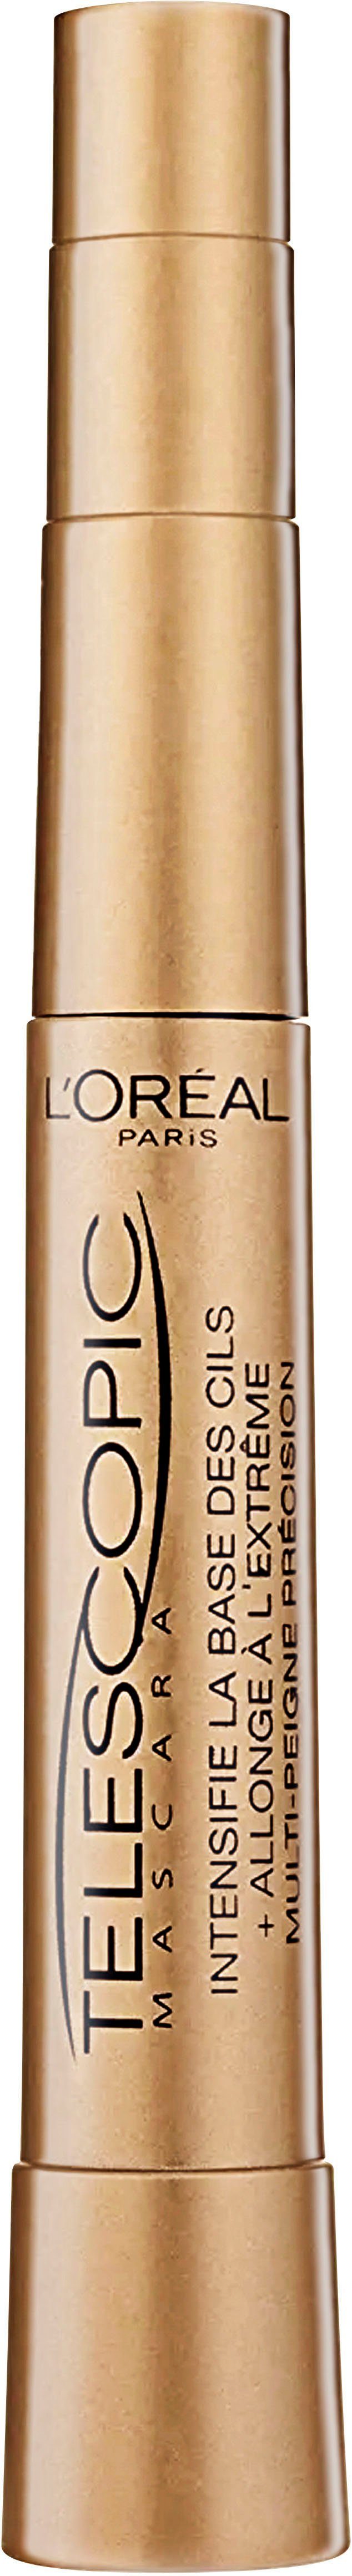 L'ORÉAL PARIS Mascara L'Oréal Paris False Lash Telescopic Gold Mascara